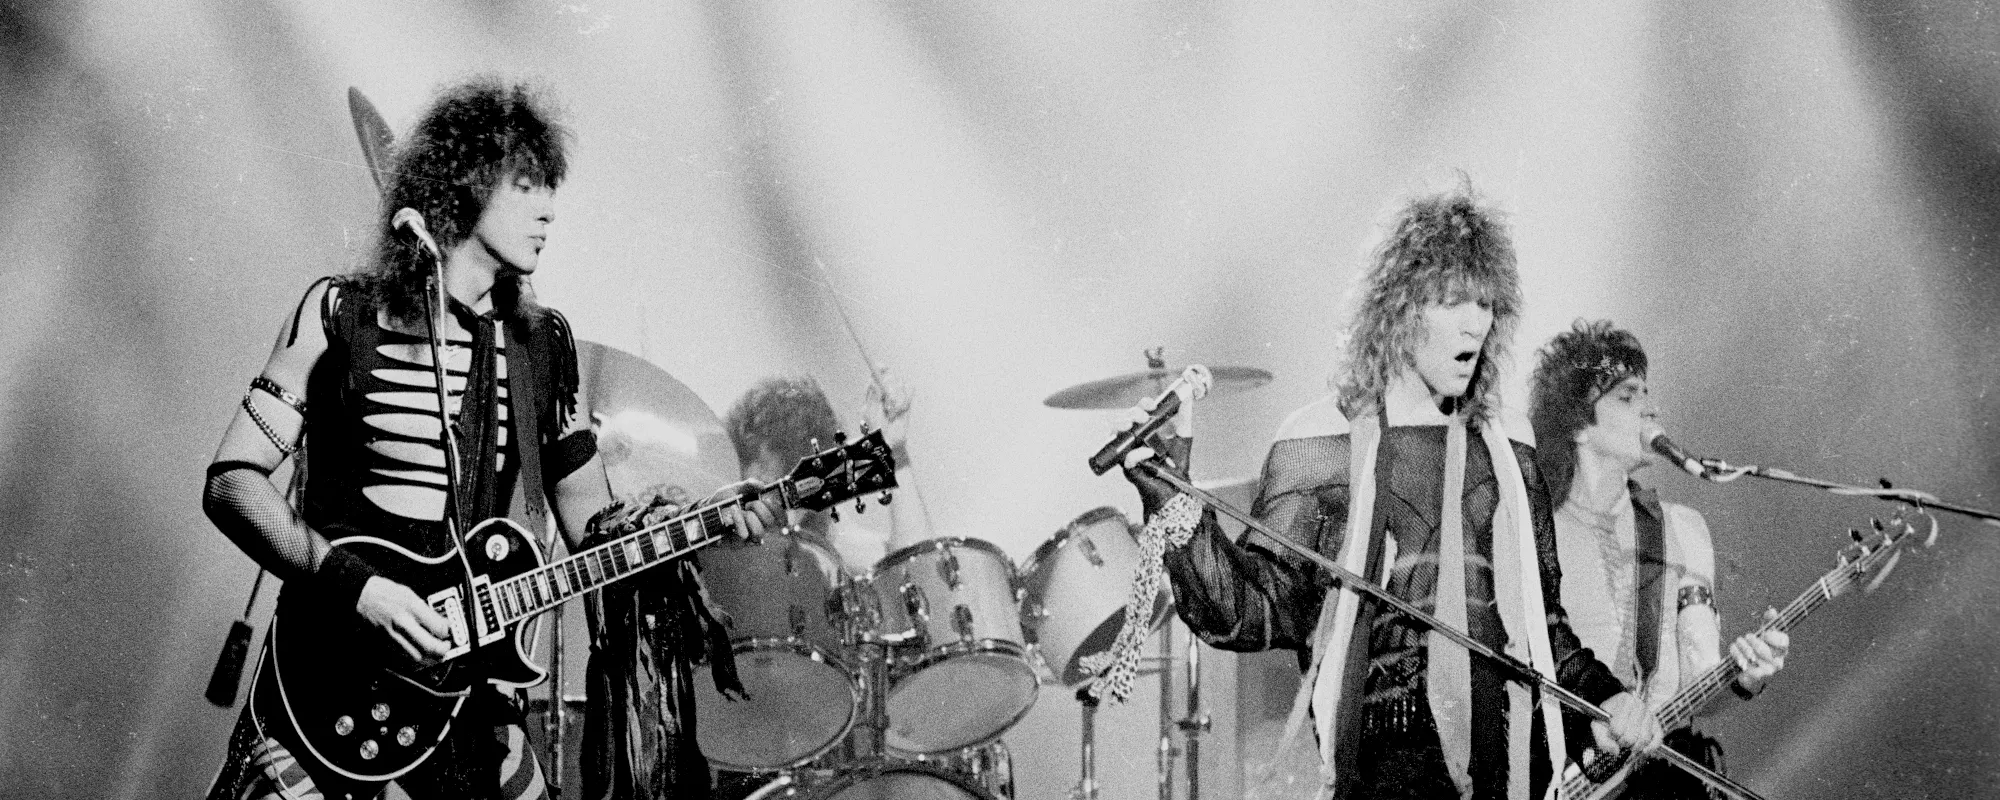 Songs You Didn’t Know Richie Sambora Co-Wrote for Bon Jovi